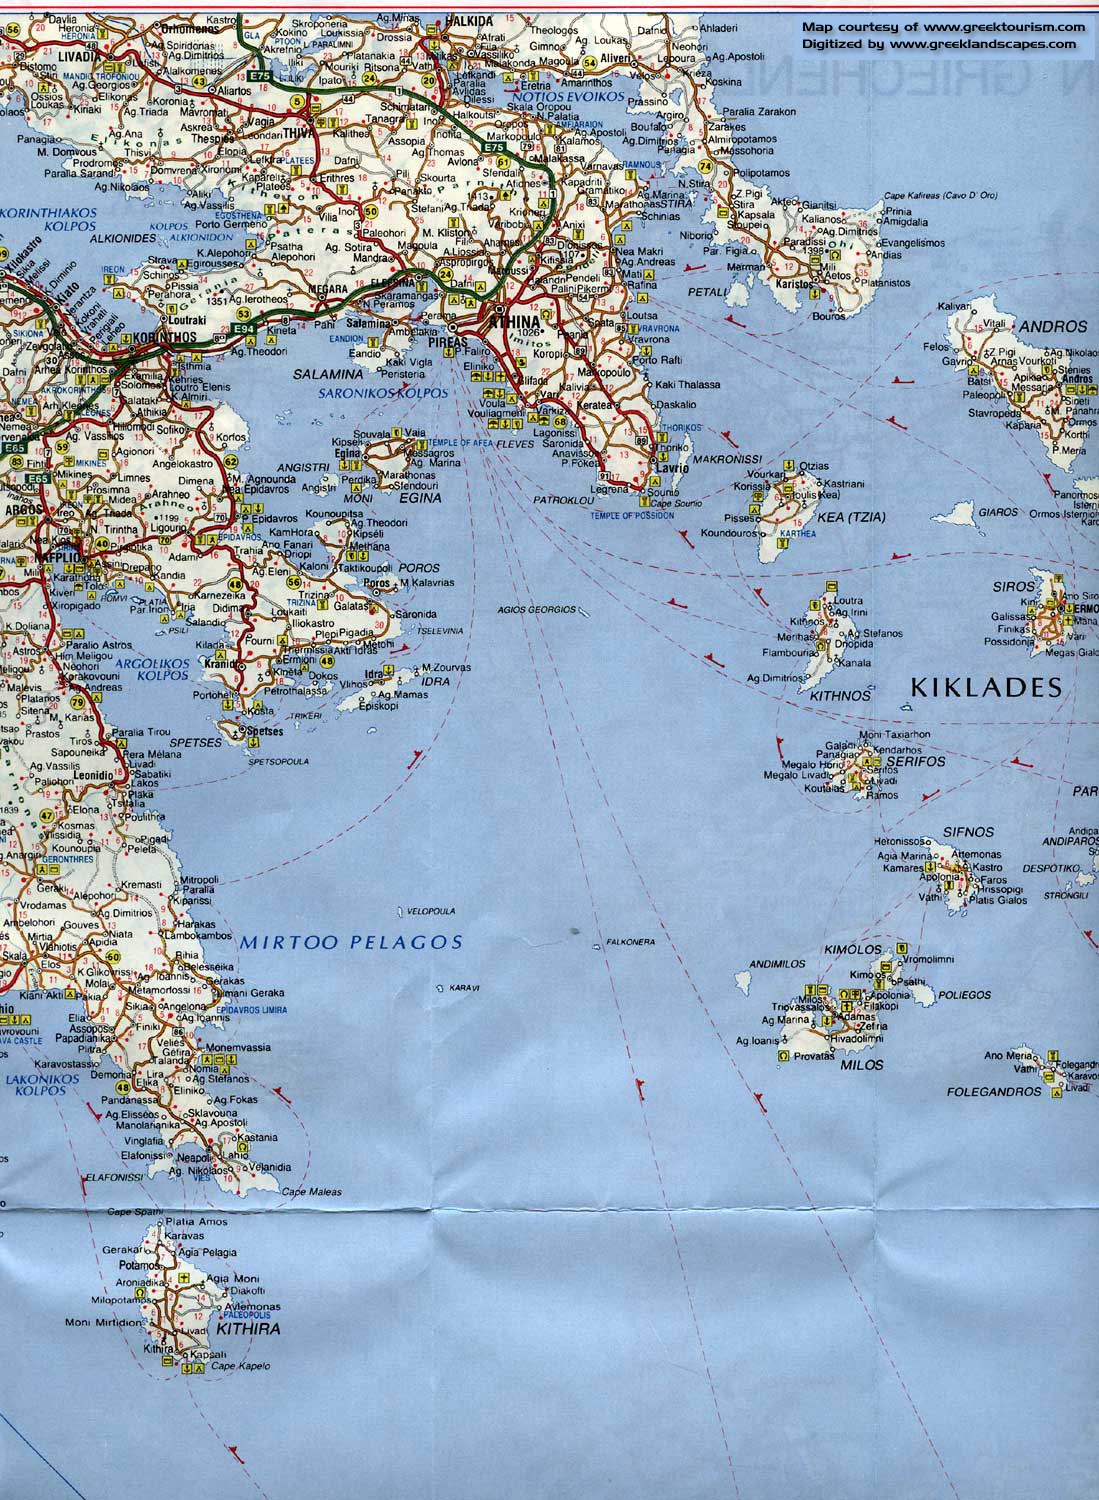 Road map to Greece Kiklades - Sifnos, Andros, Kithnos, Serifos, Milos.. 